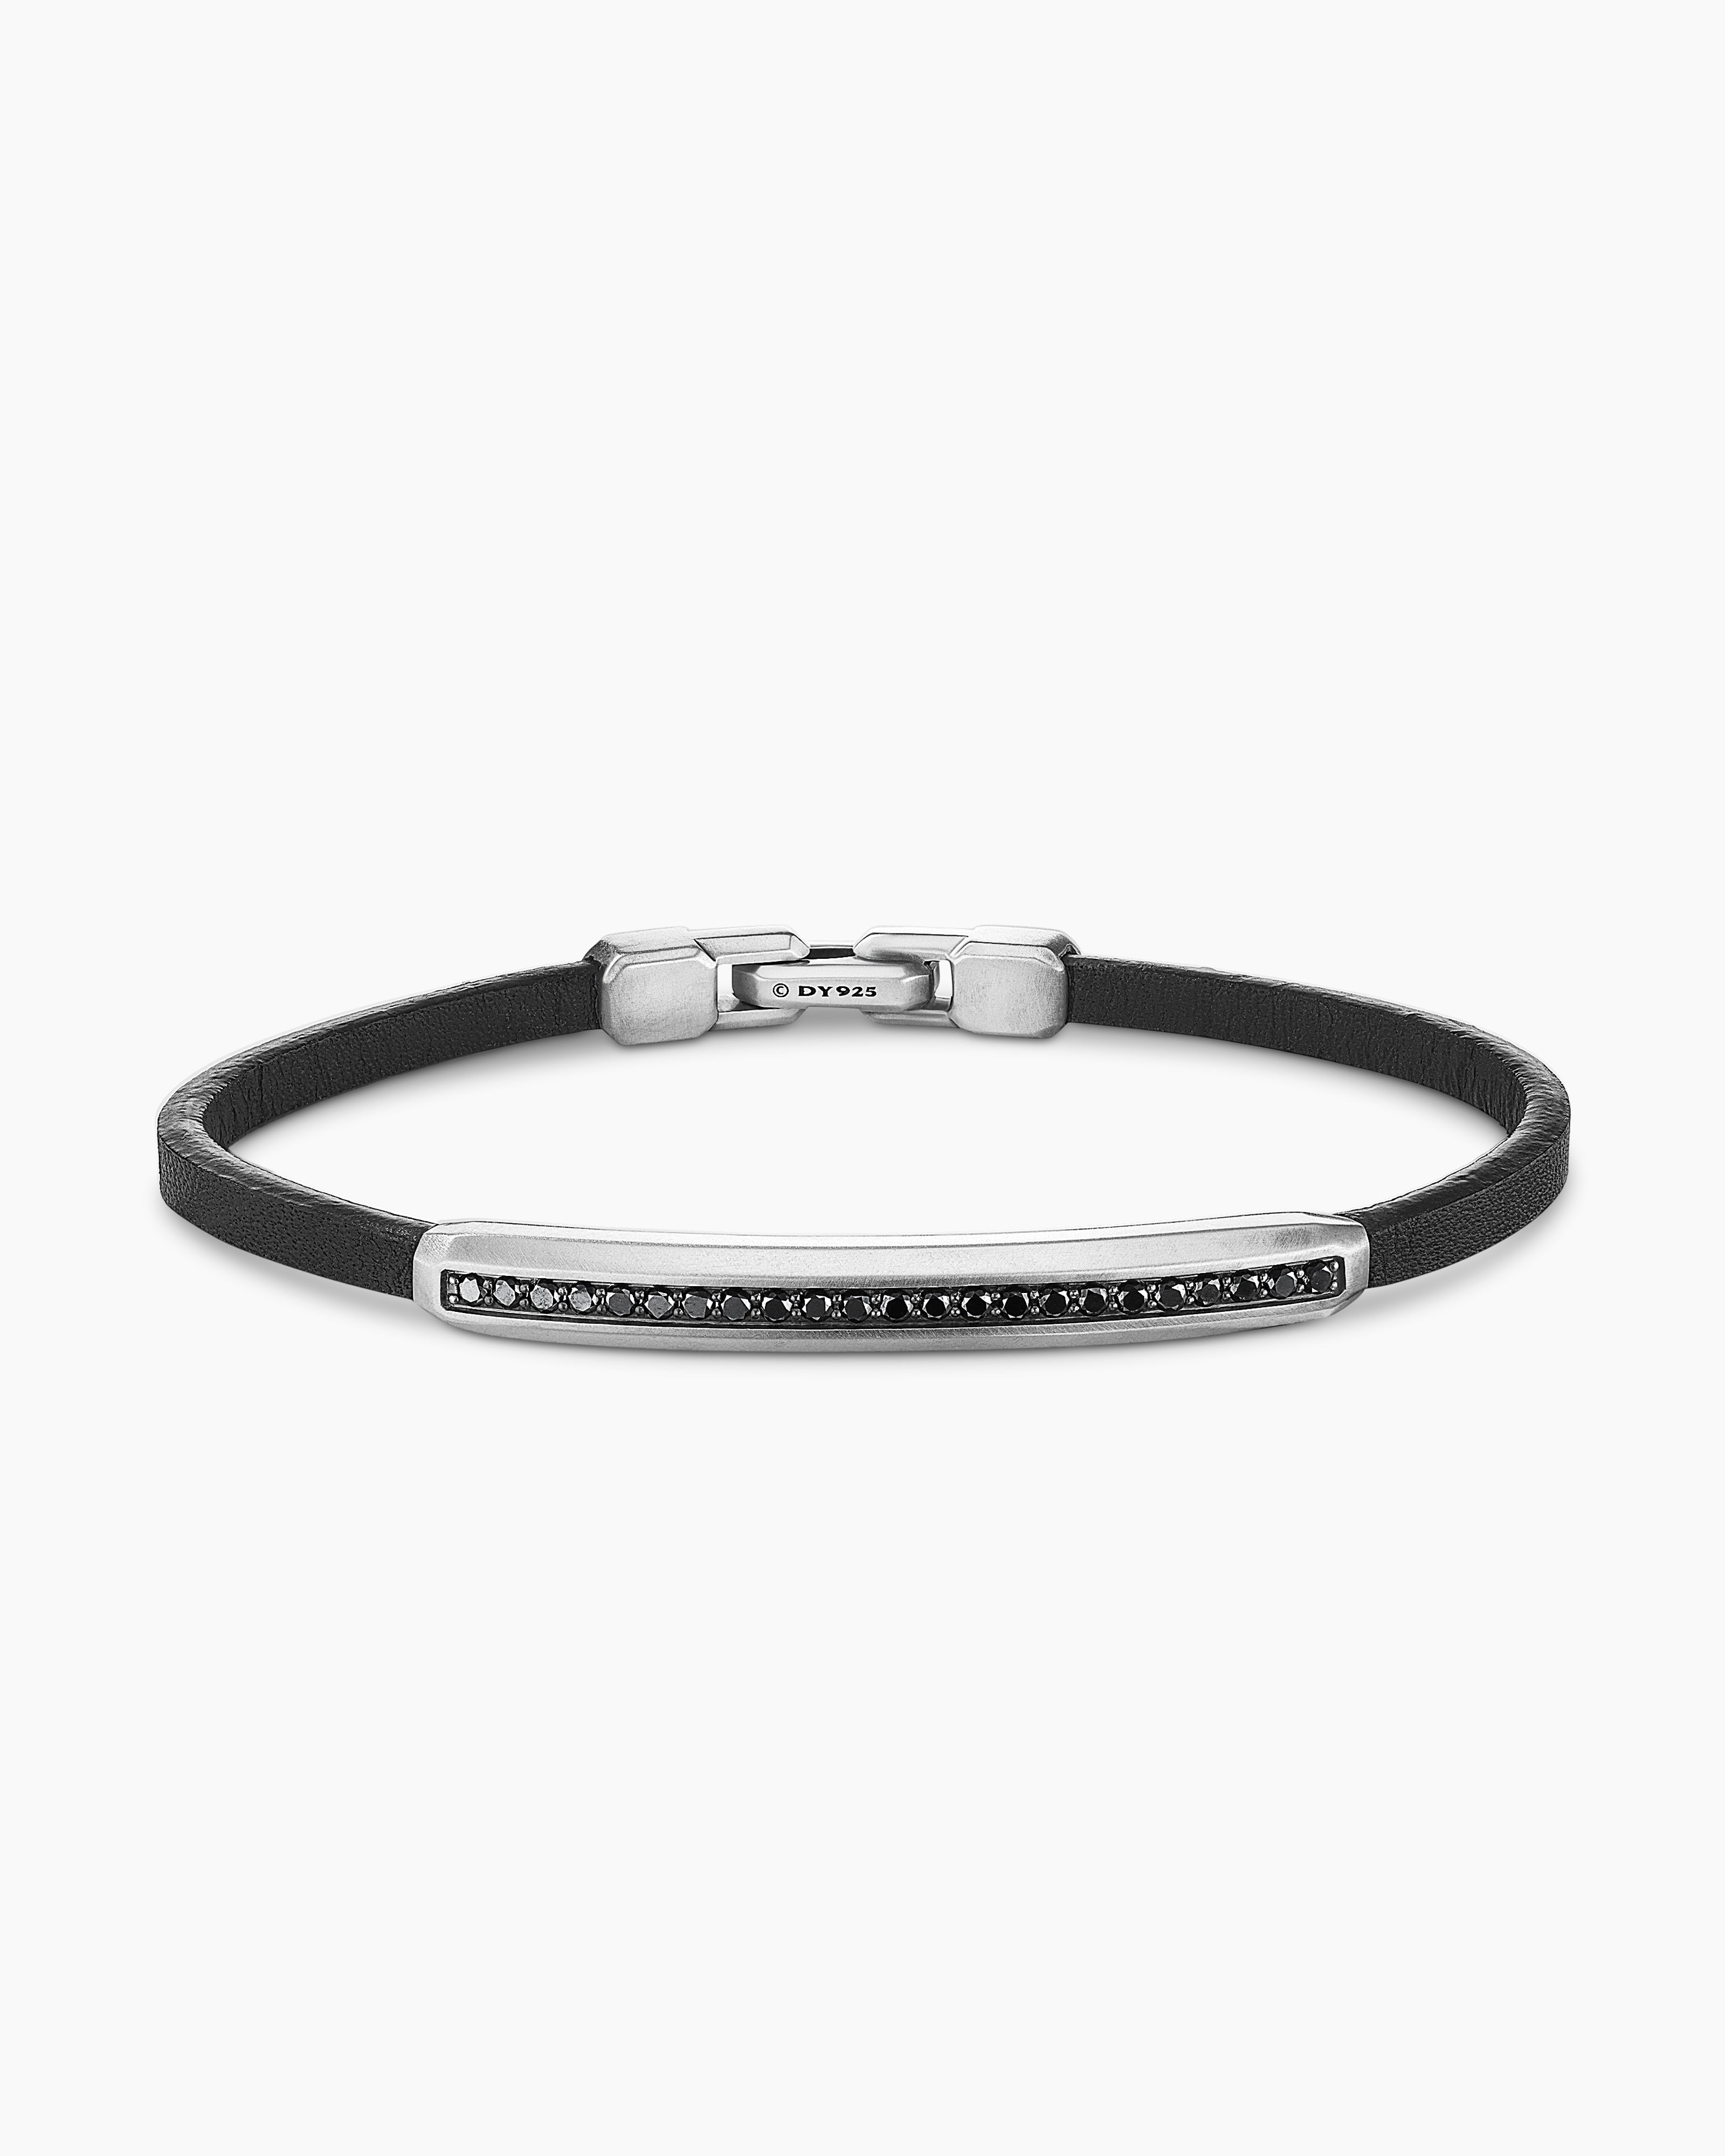 BALI 925 Silver Leather Bracelet For Men - Vivaaz Gems